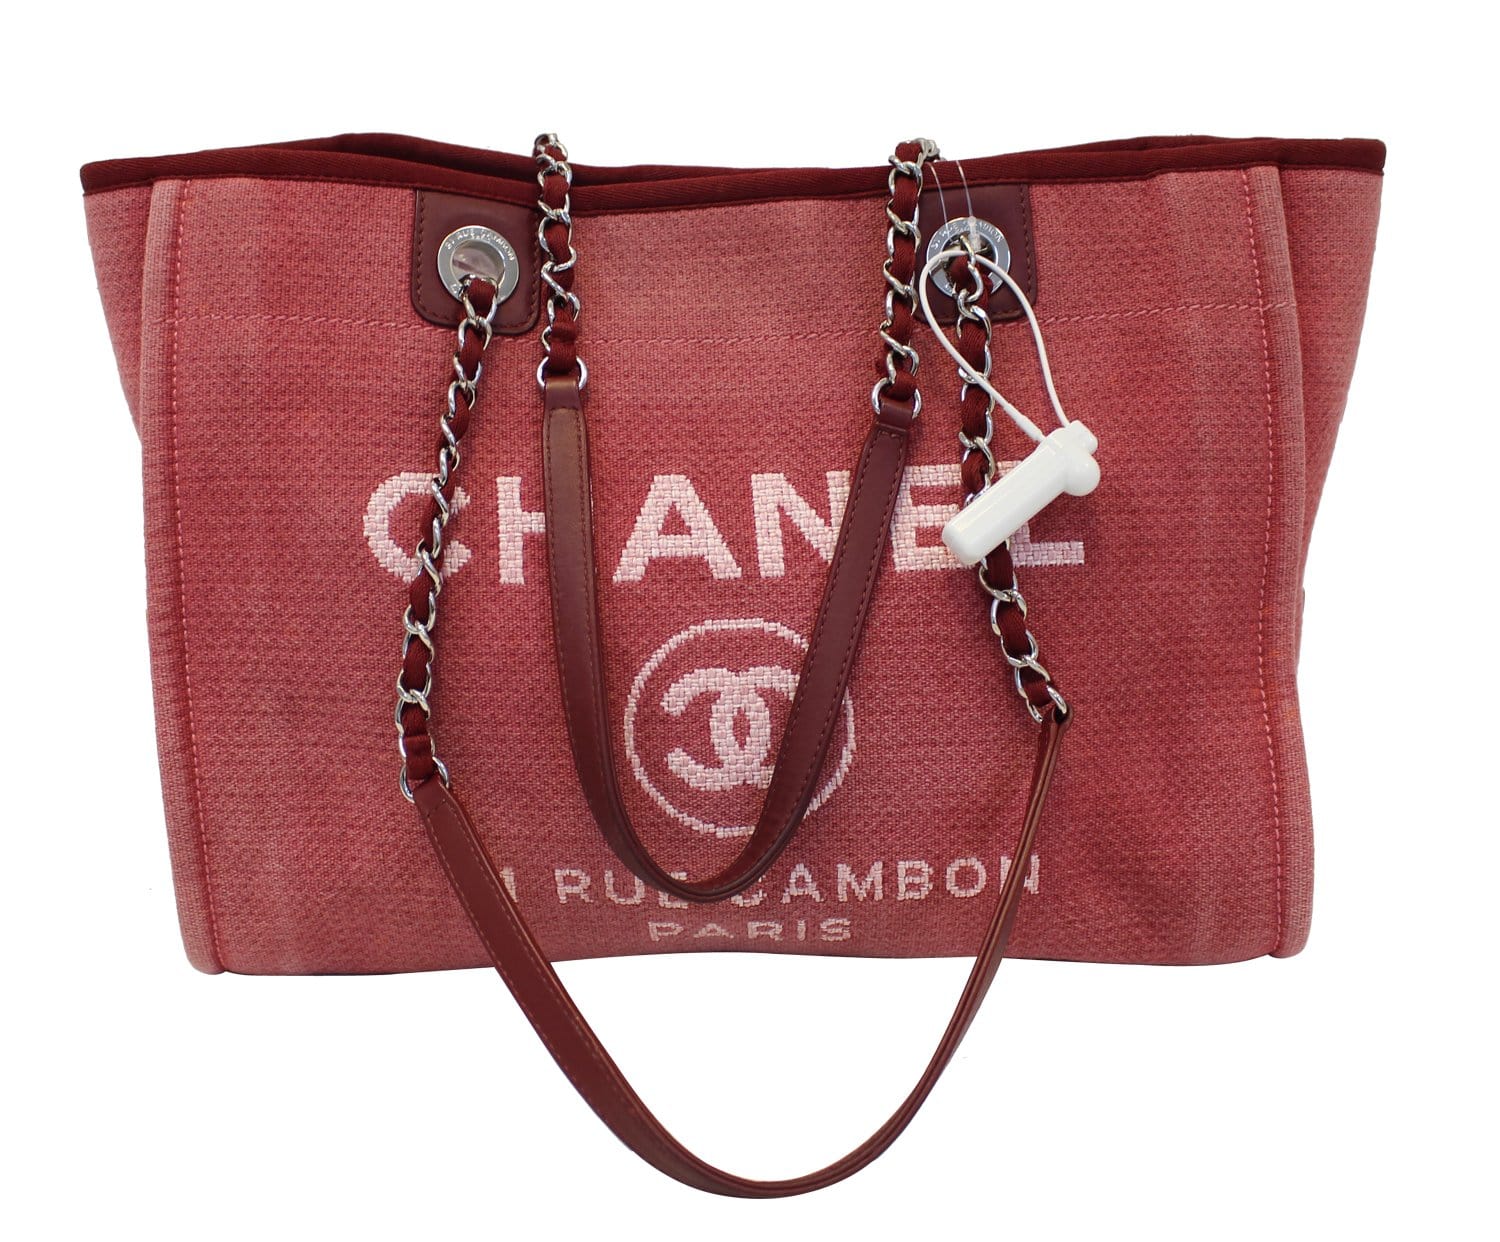 Chanel Chanel White x Pink Canvas Medium Tote Bag